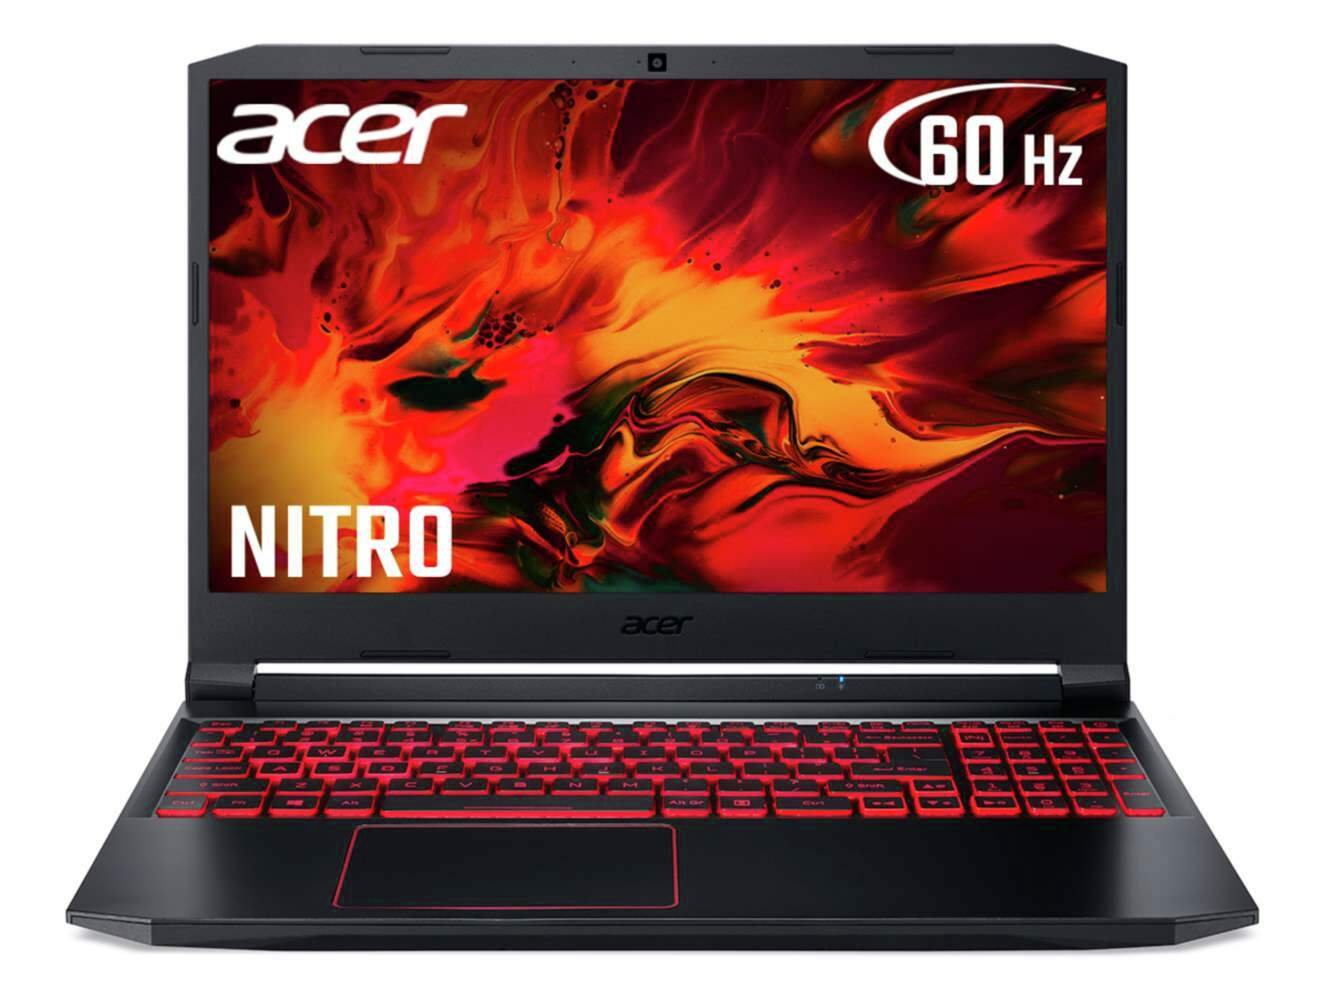 Acer Nitro 5 15.6in i7 8GB 512GB GTX1650Ti Gaming Laptop Review